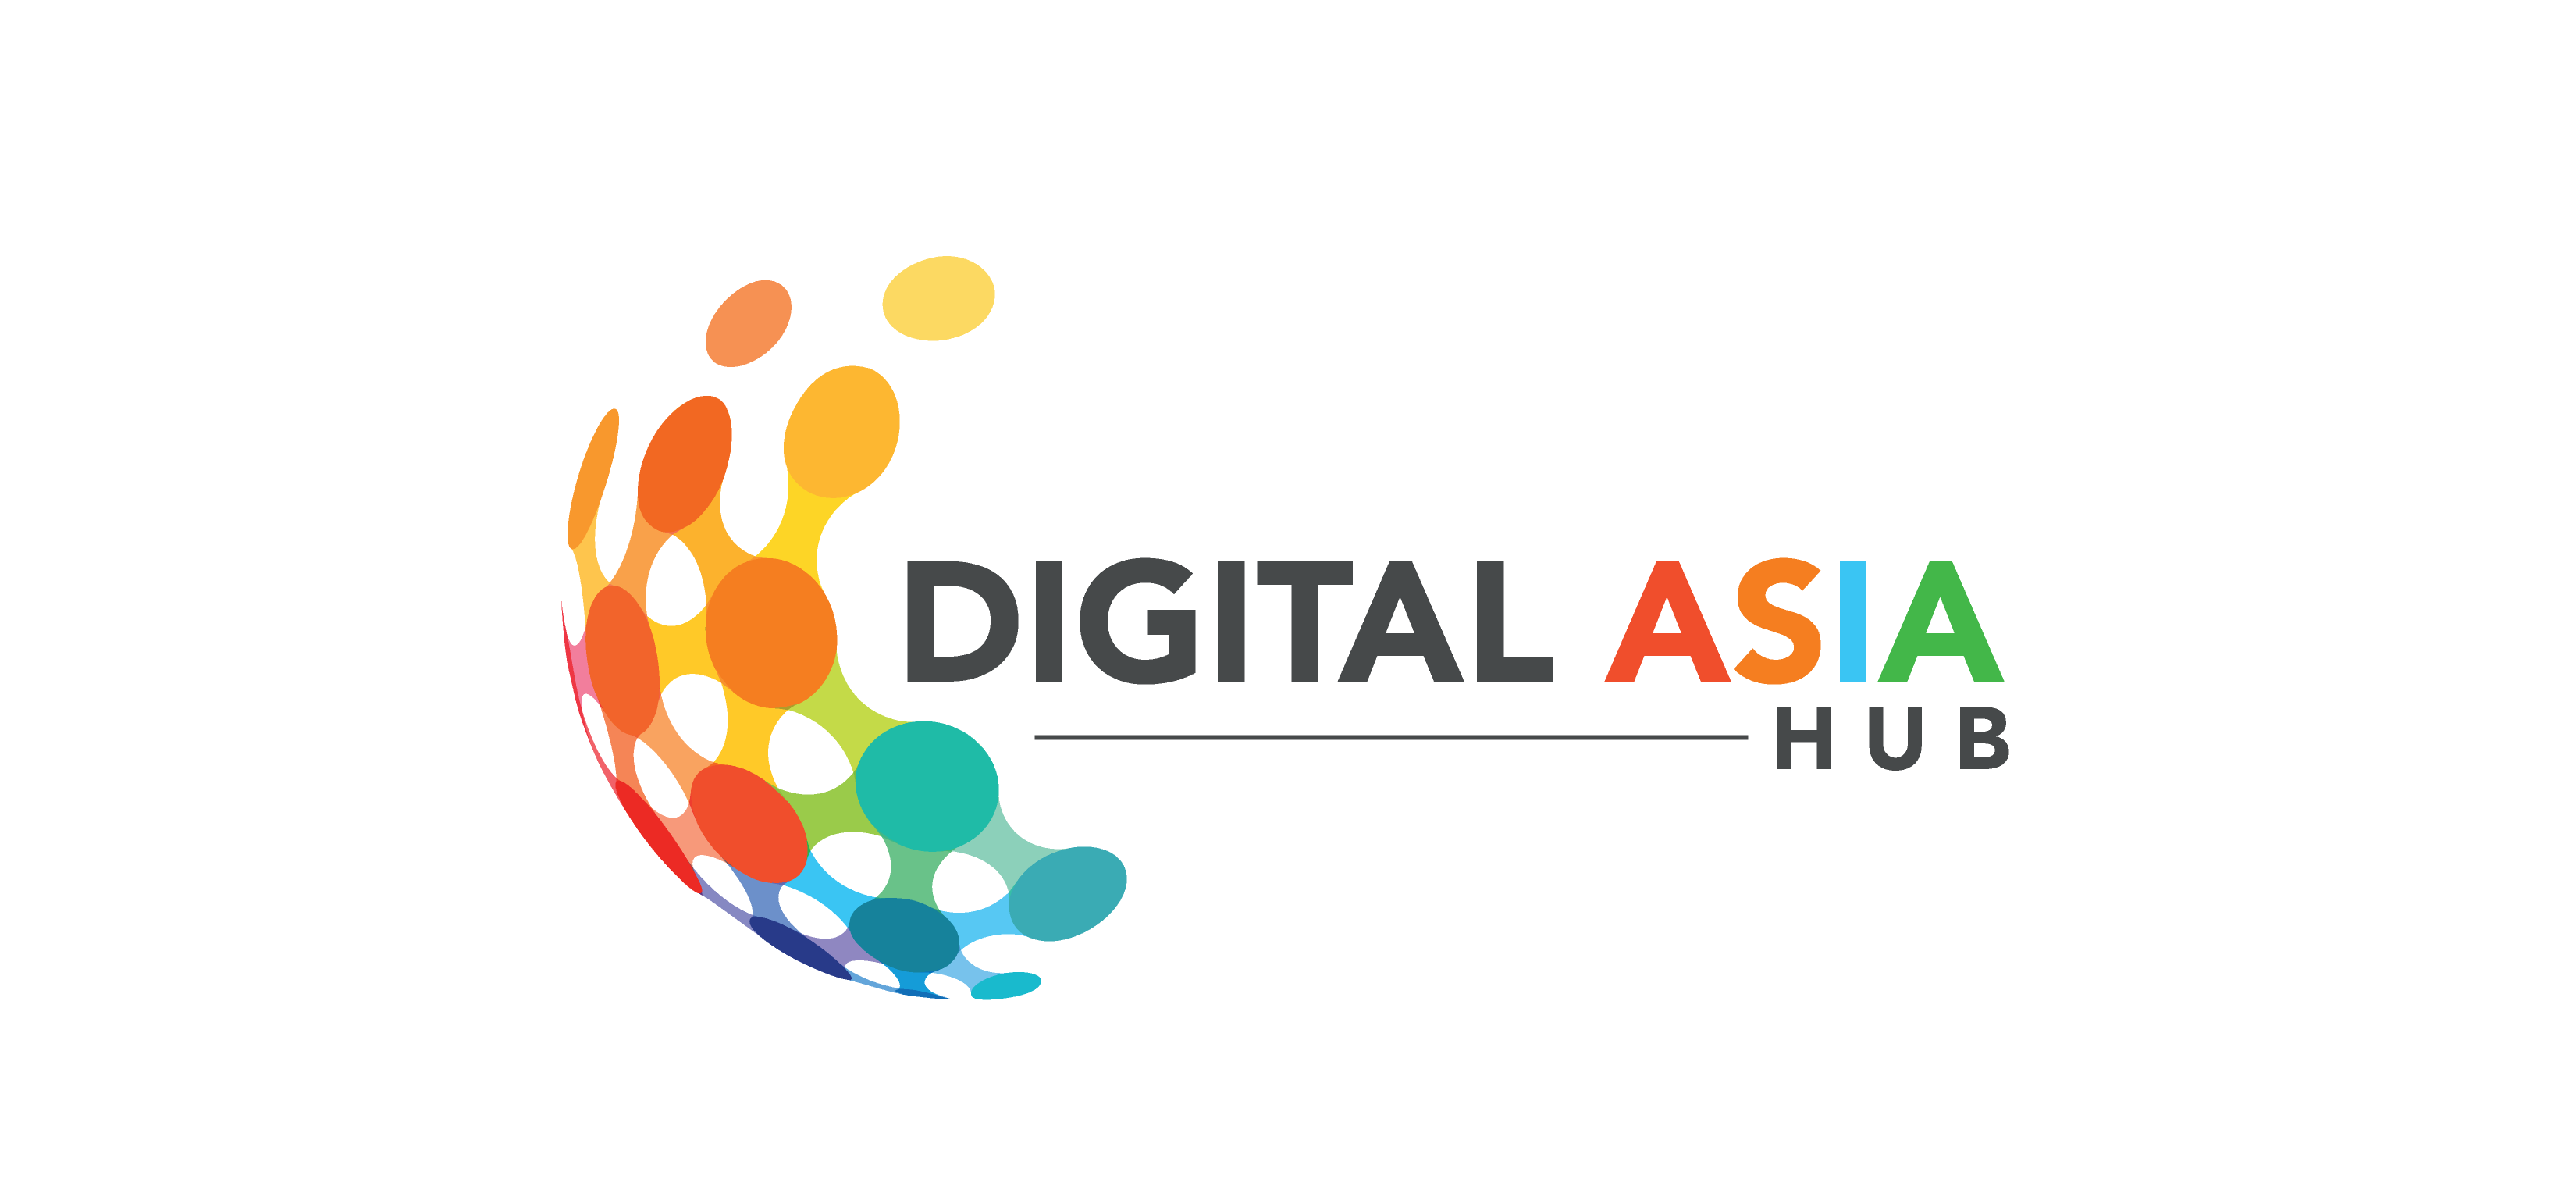 Small Books for Big Platforms - Digital Asia Hub